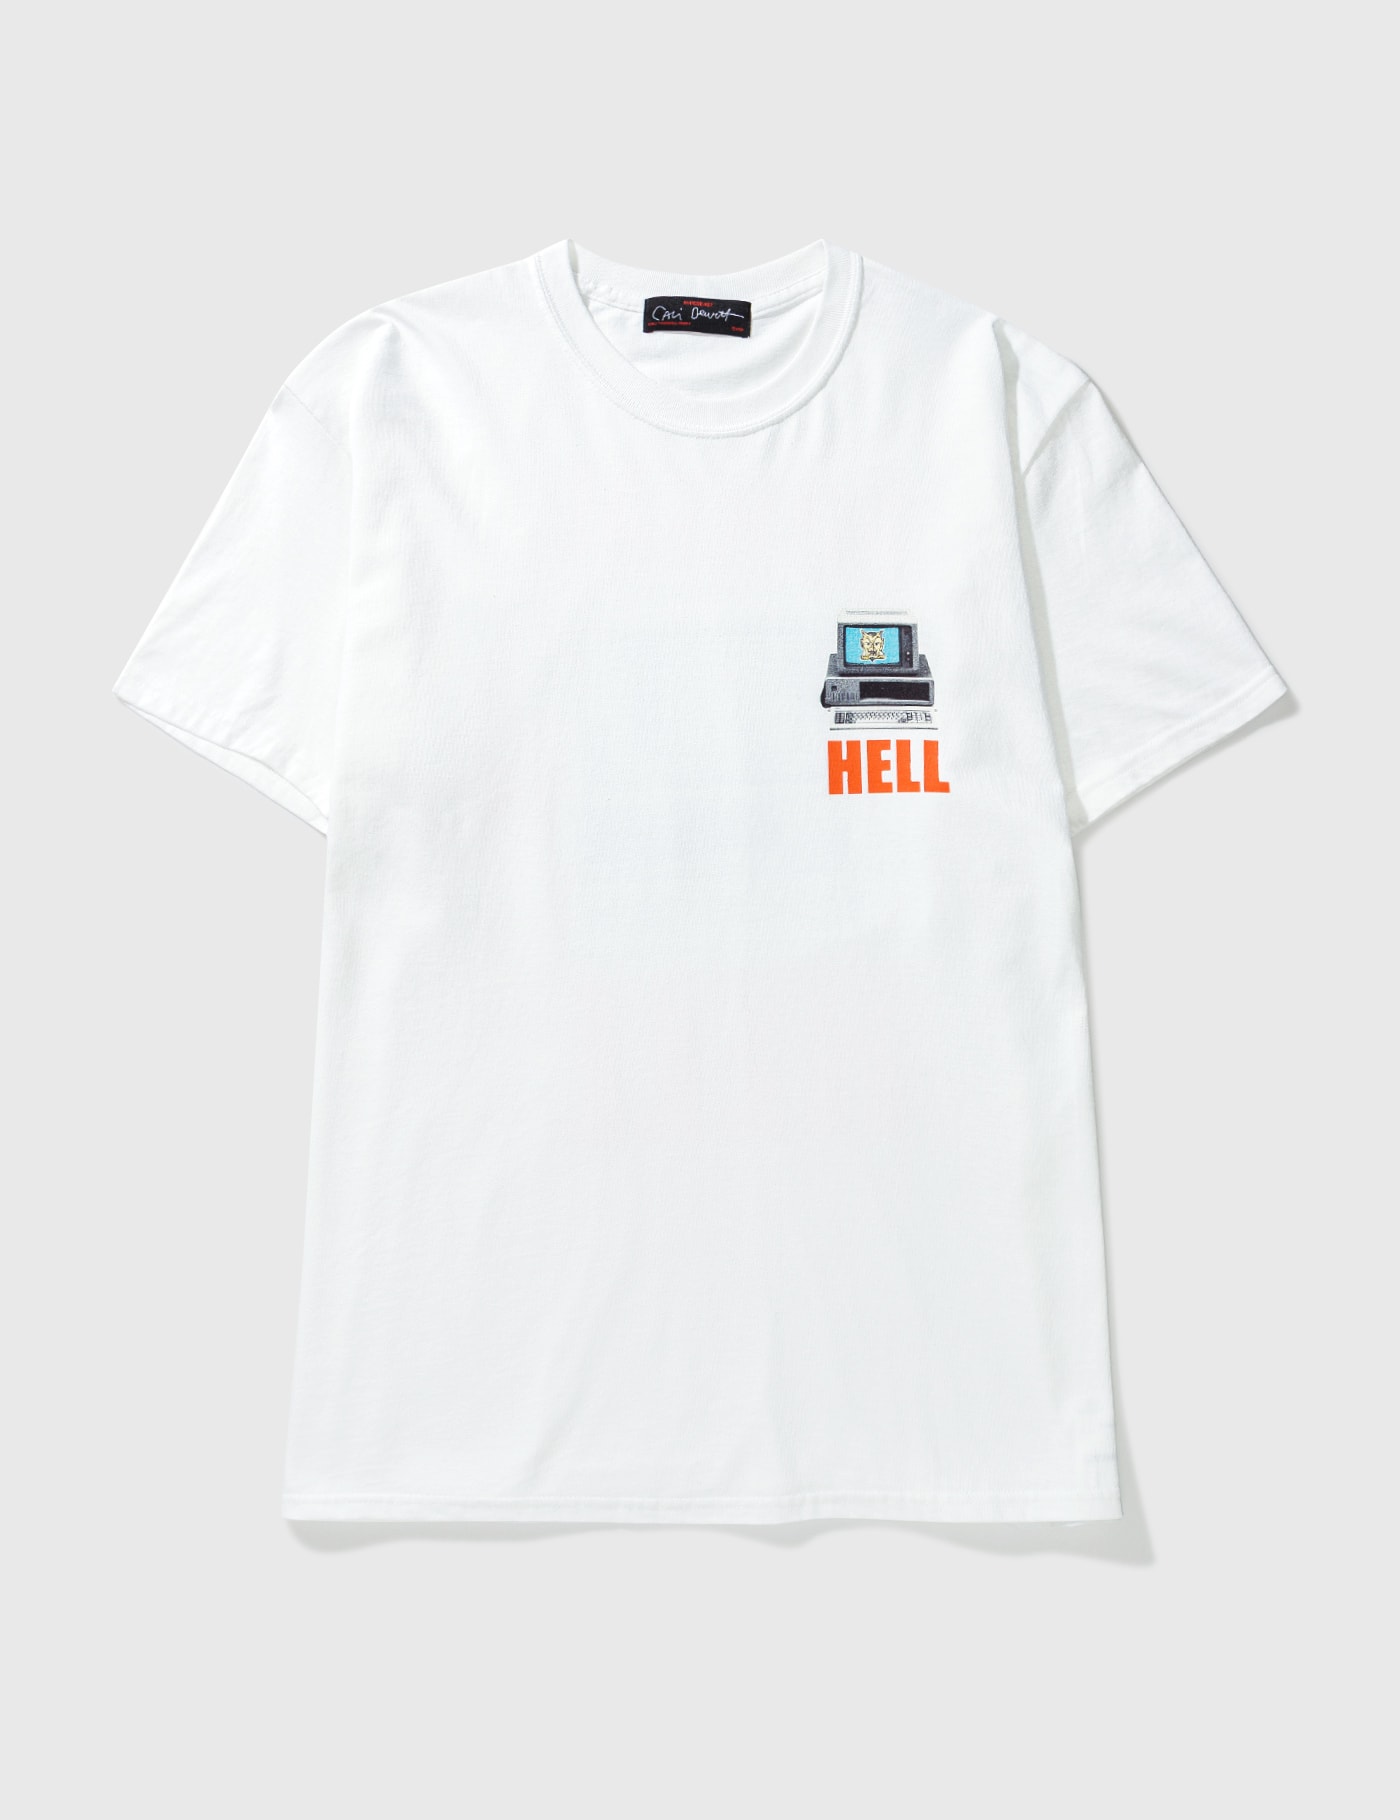 Hypebeast Cali Thornhill Dewitt X  T-shirt In White